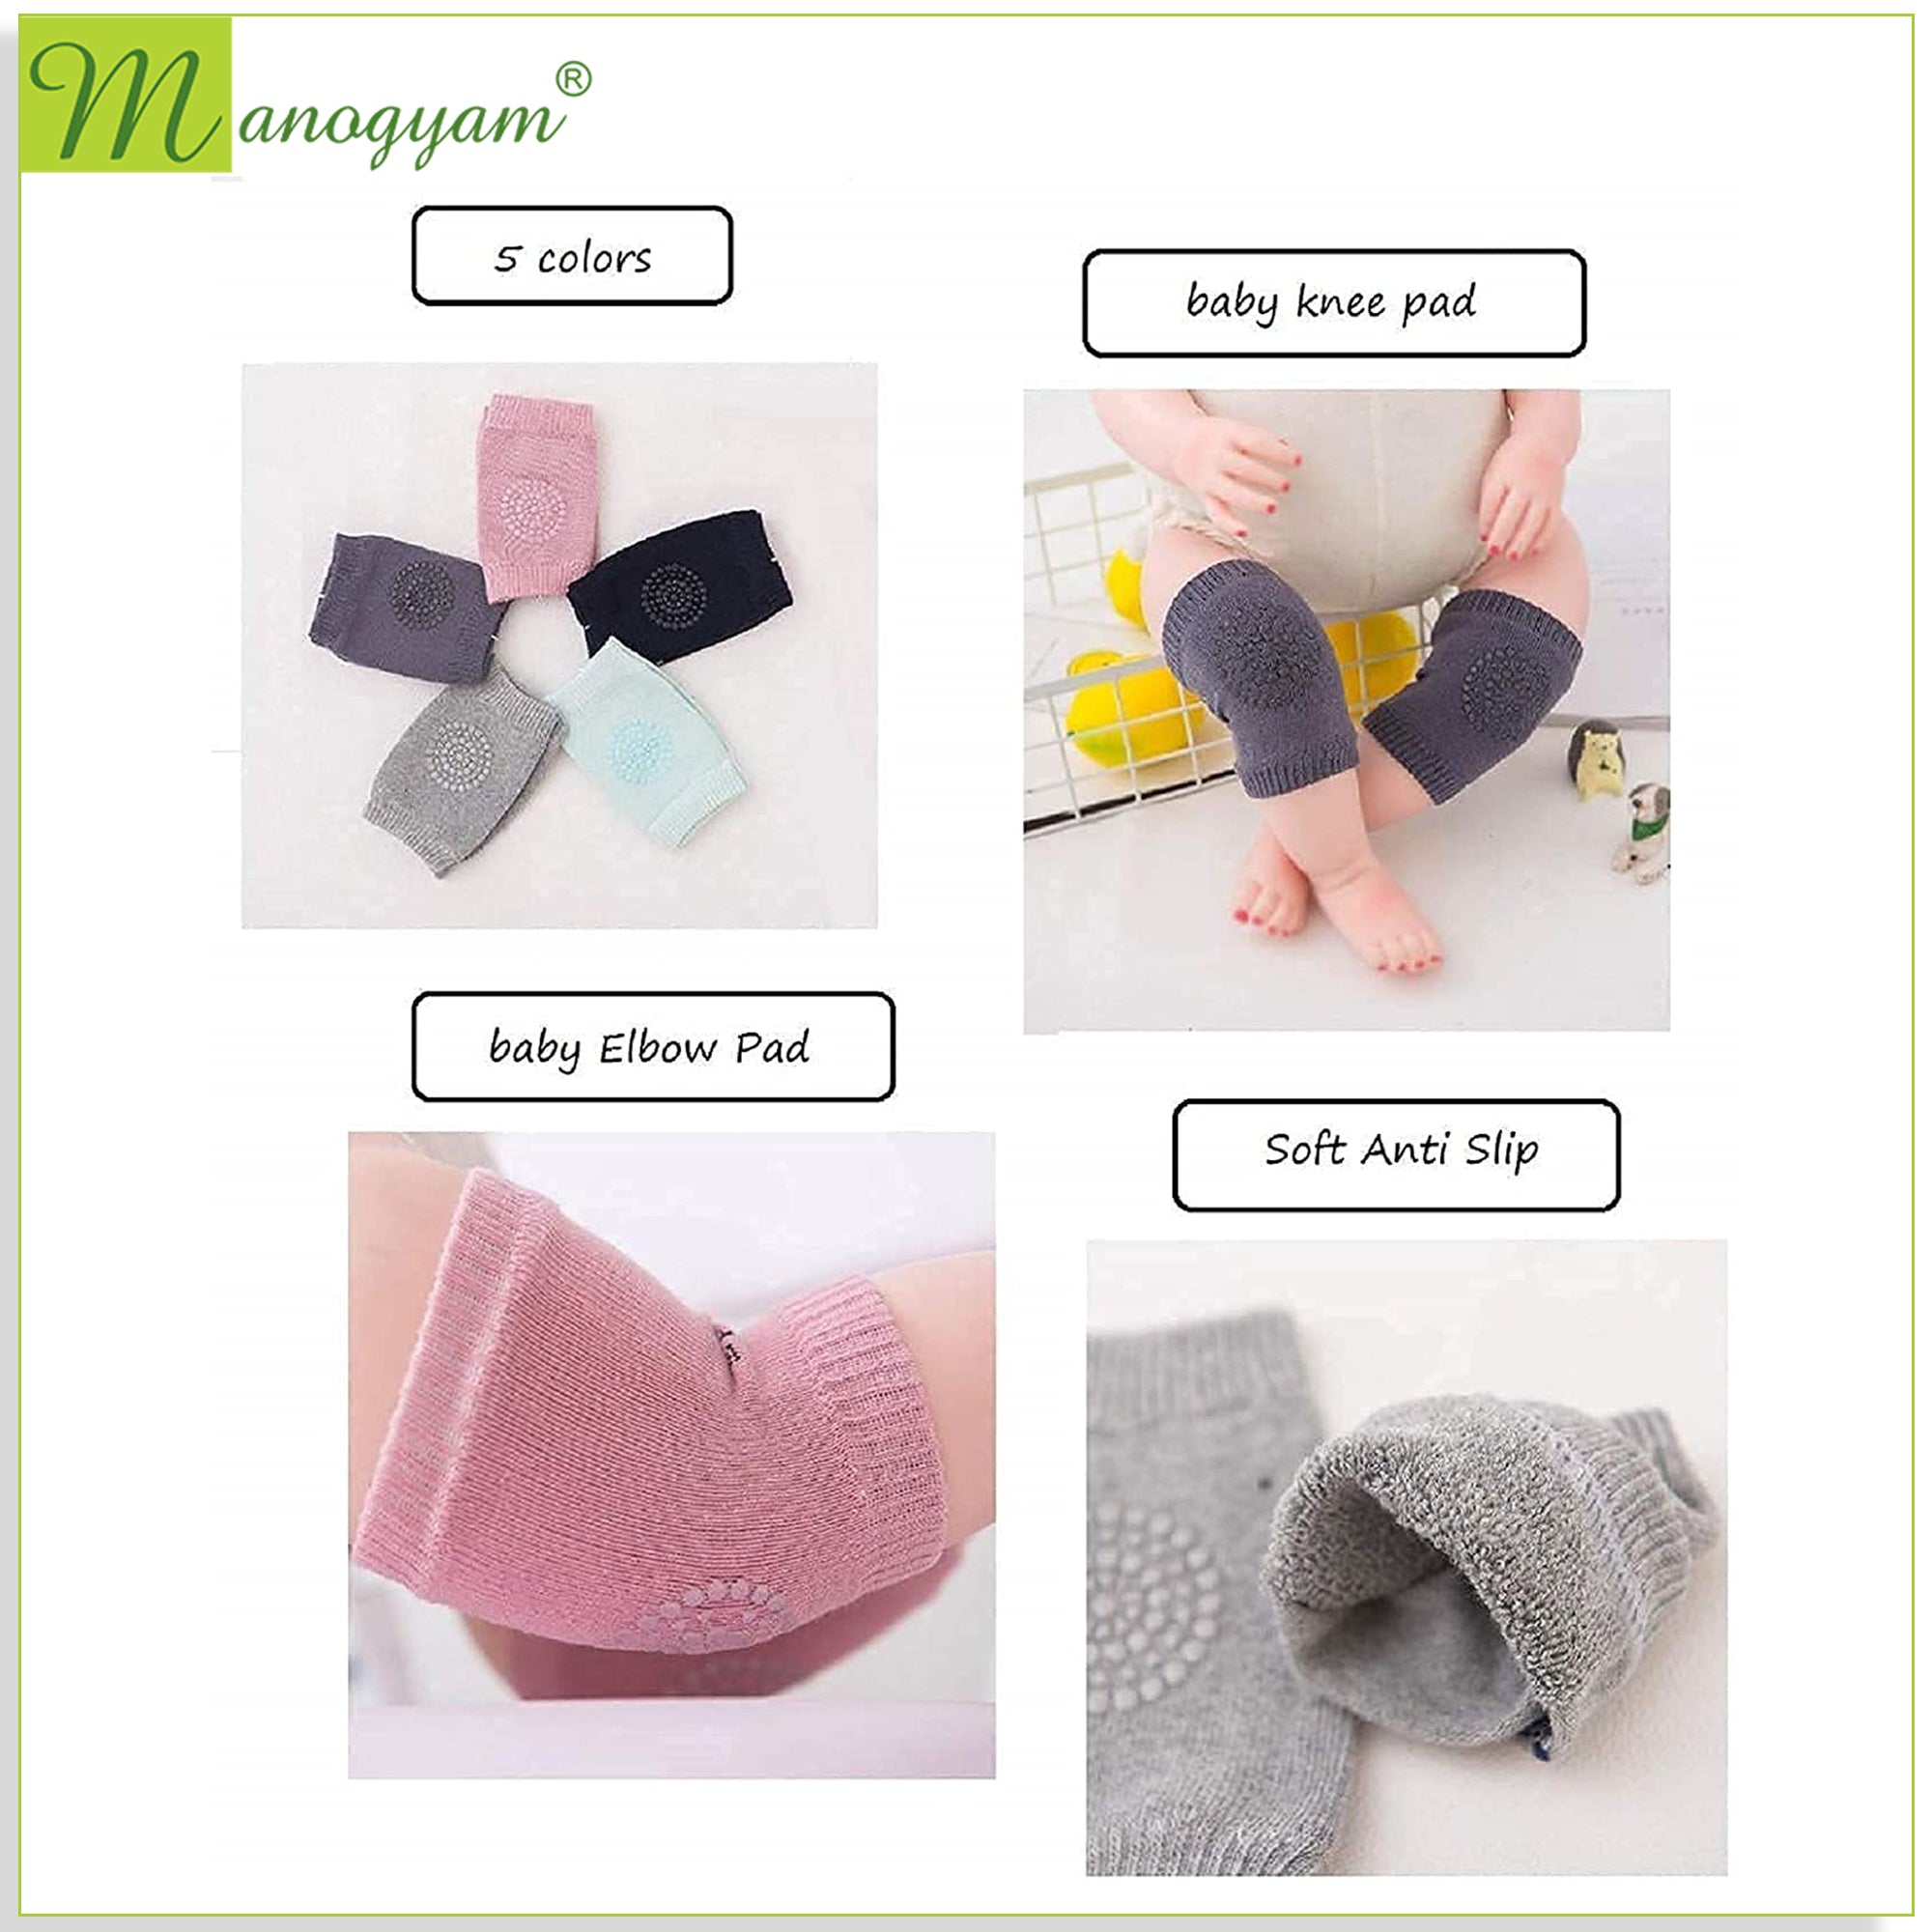 Manogyam Comfortable Baby Knee Pads for Crawling